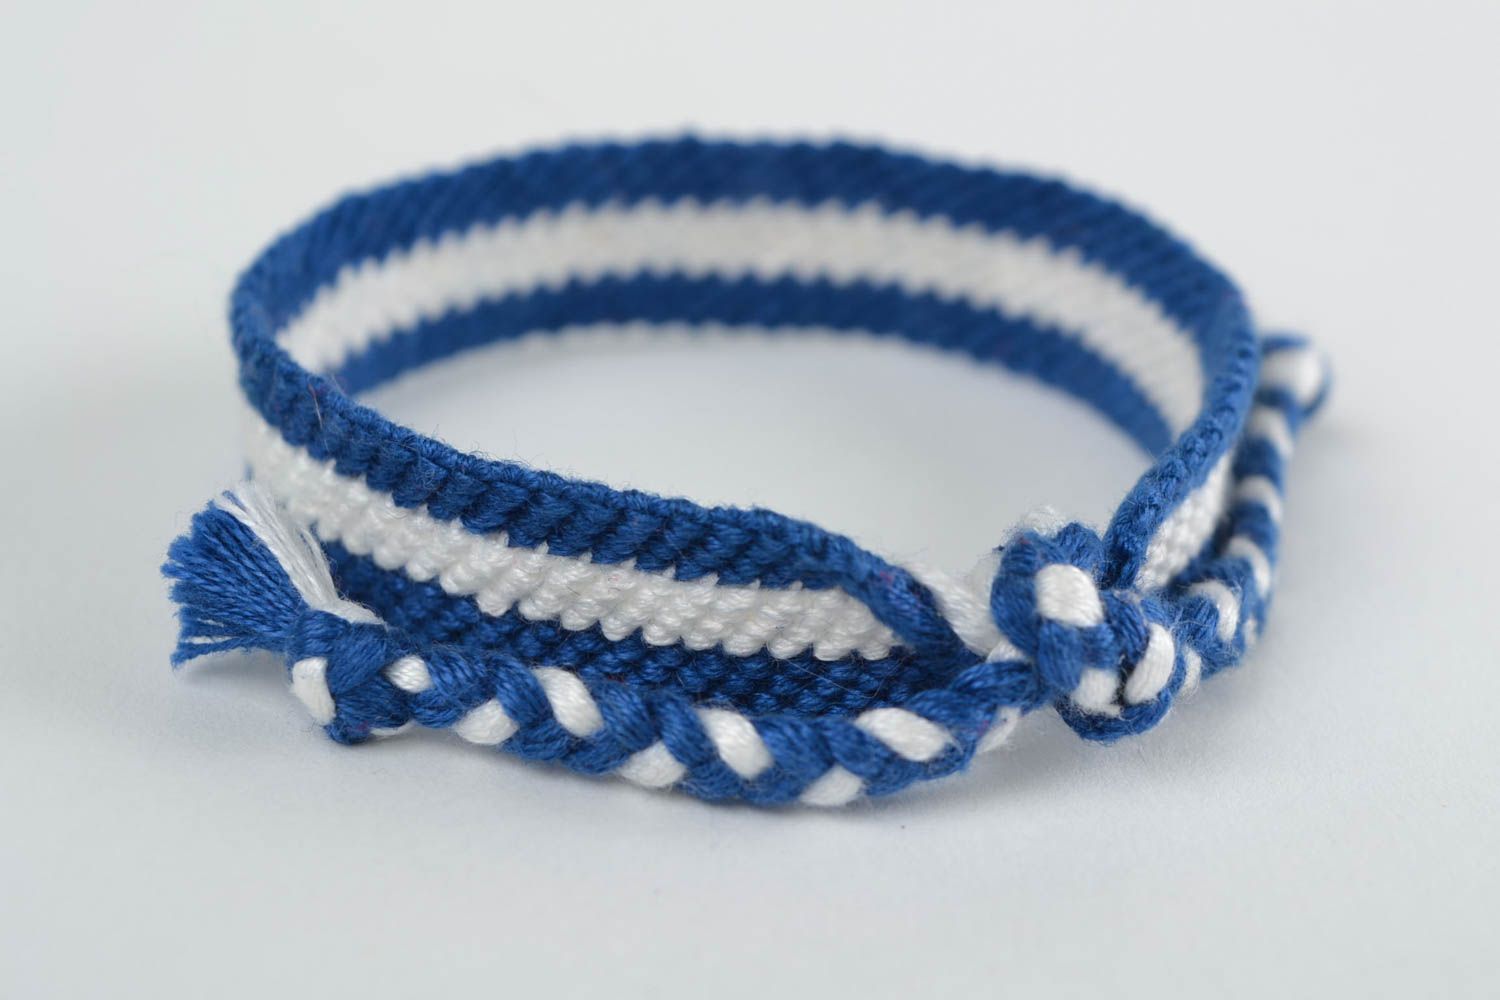 Handmade thin friendship wrist bracelet woven of blue and white threads photo 4